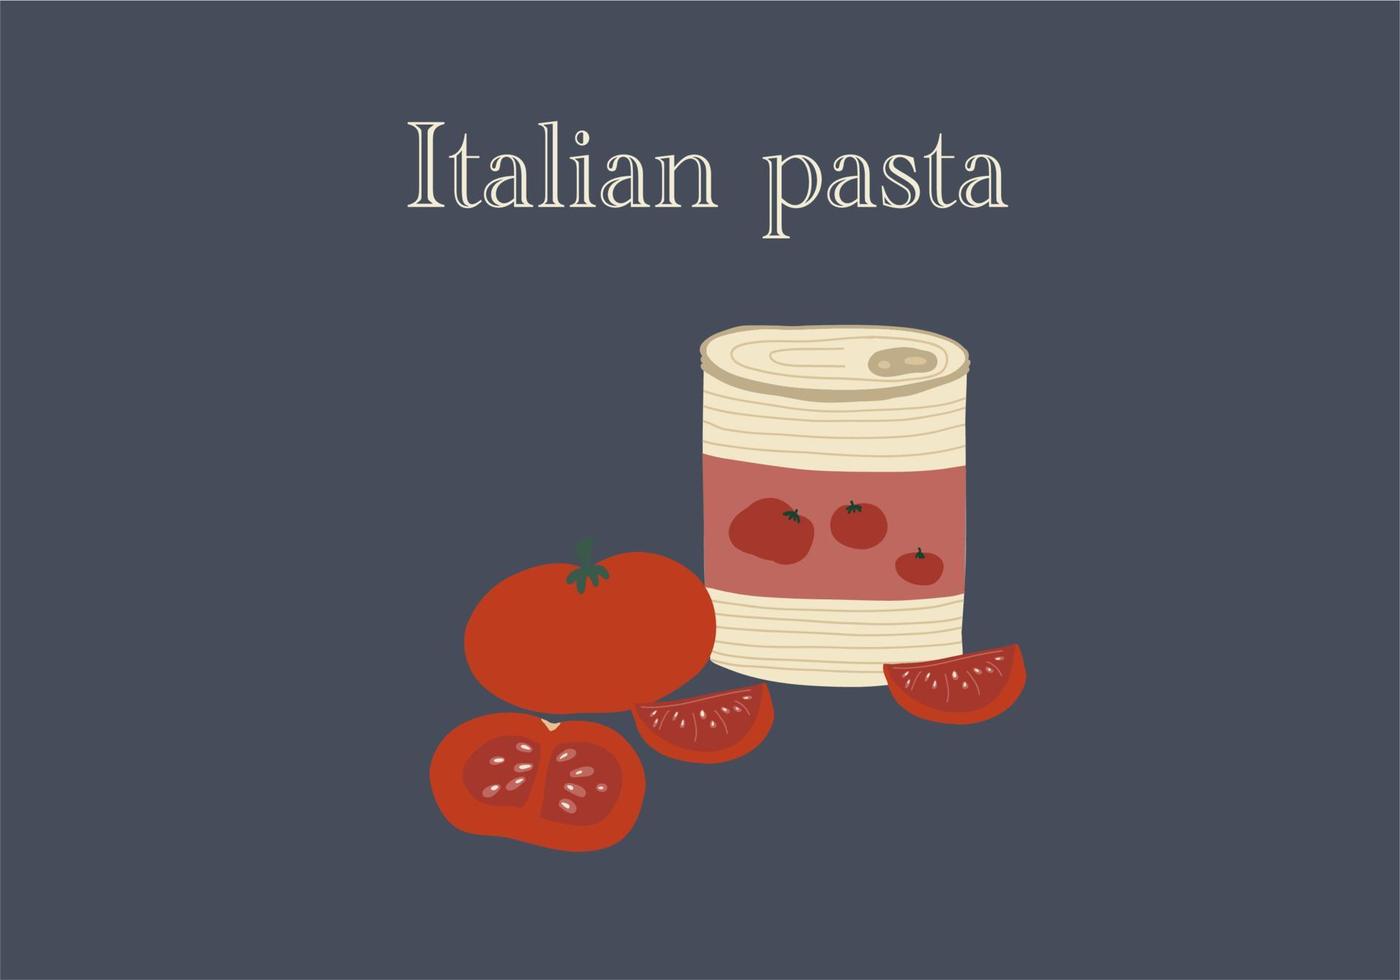 tomate pasta mano dibujado para italiano pasta vector